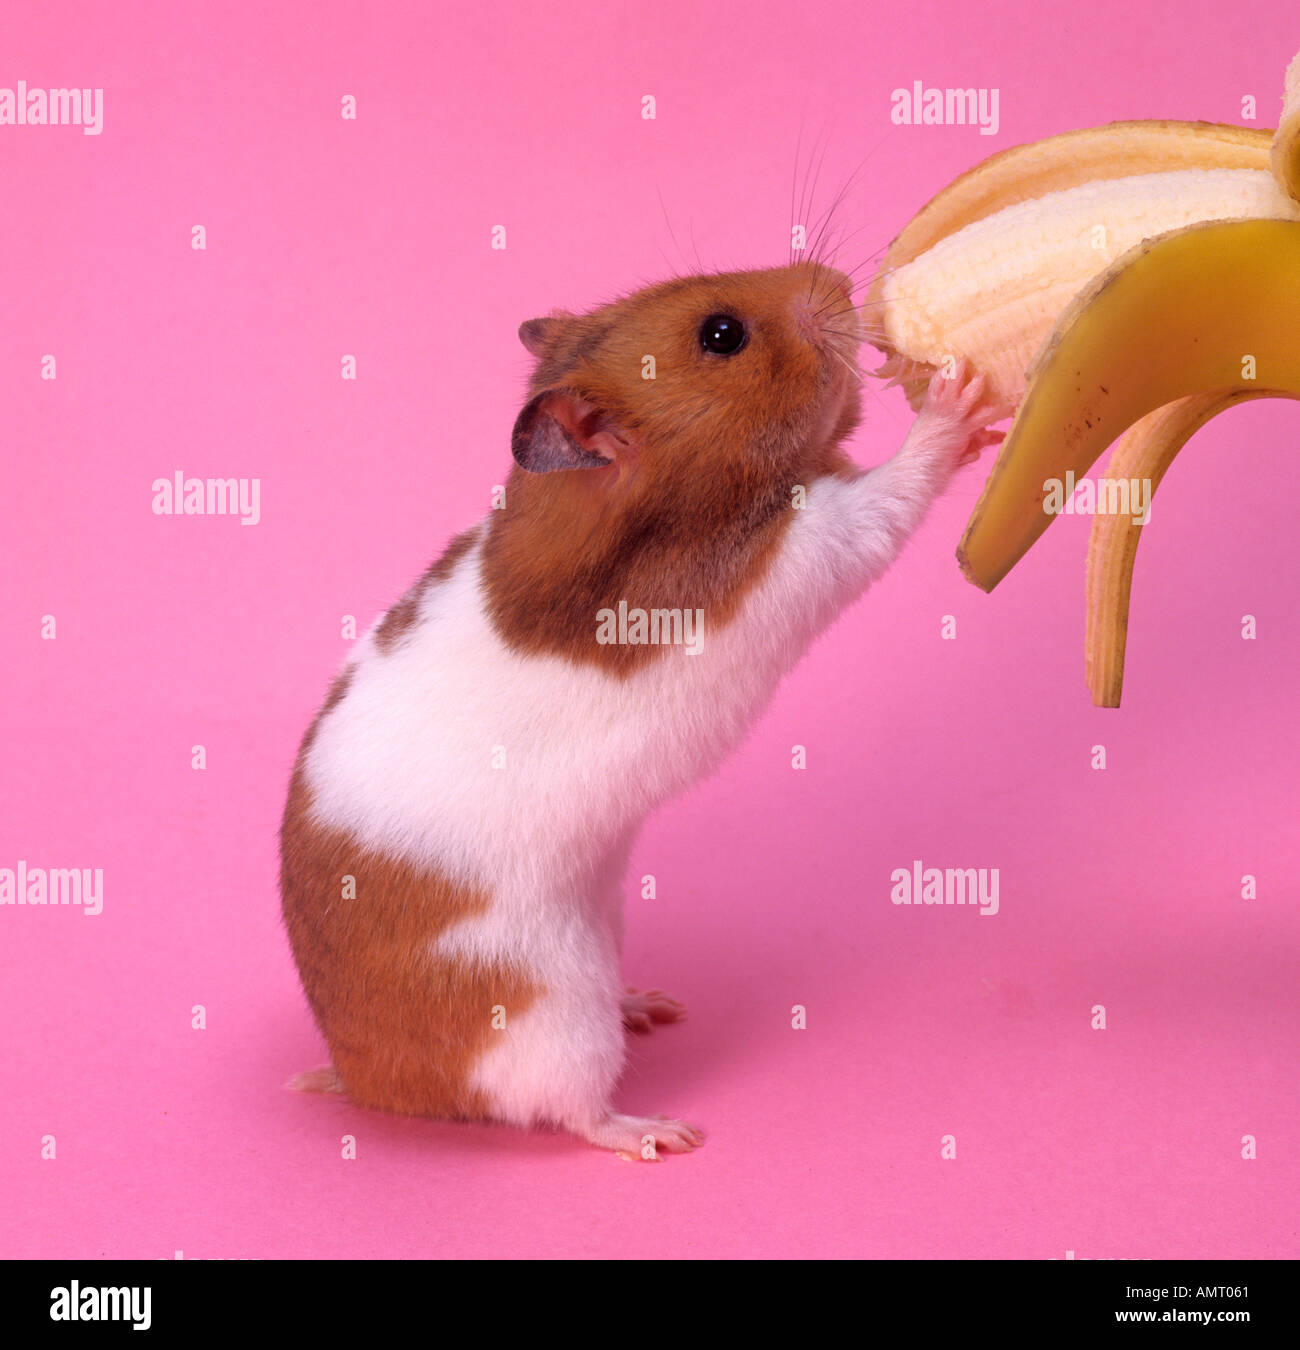 Pet Hamster Eating Banana Stock Photo